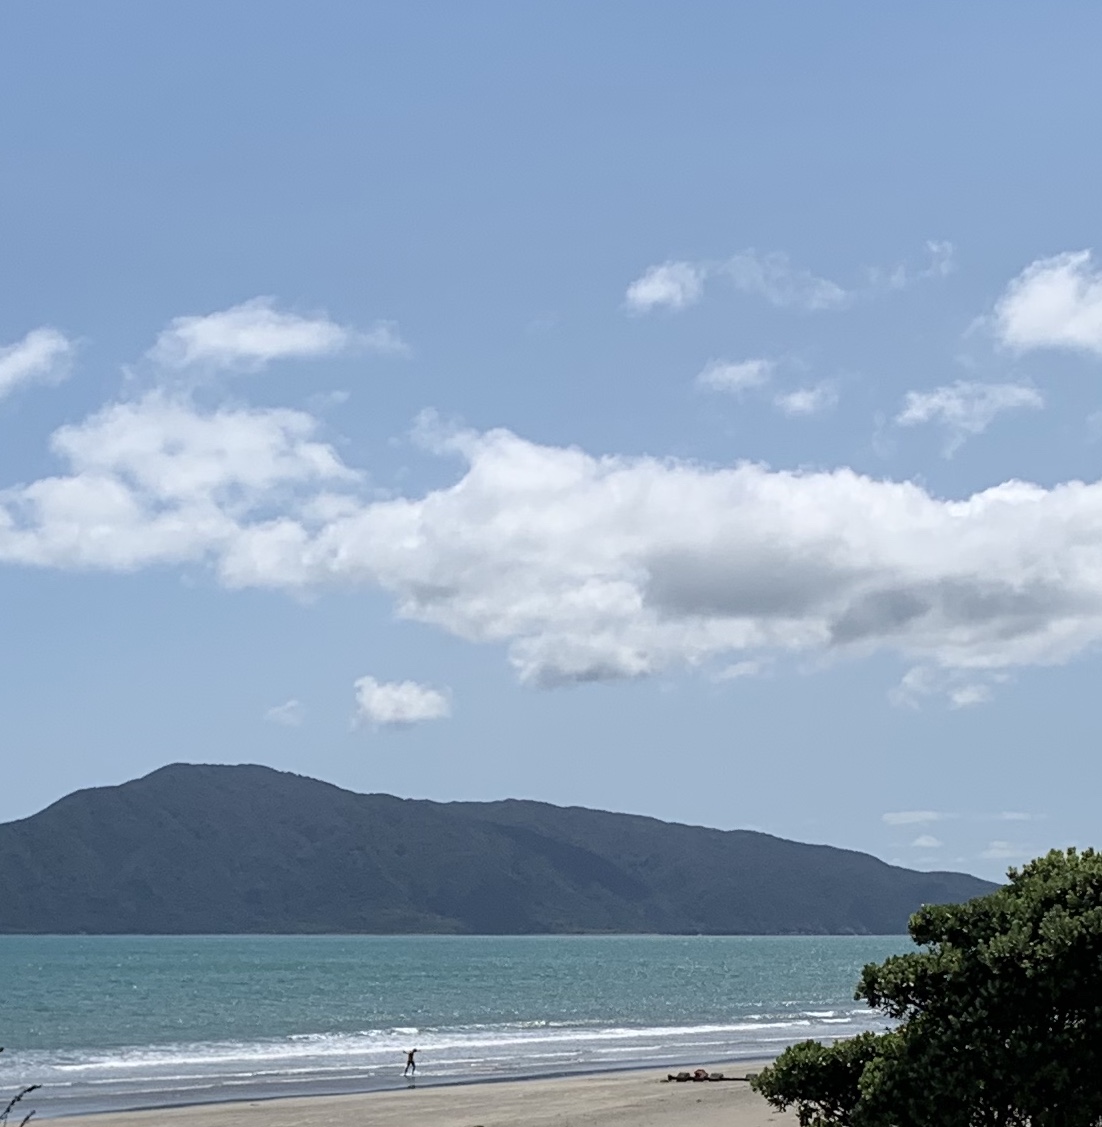 Paraparaumu beach in New Zealand